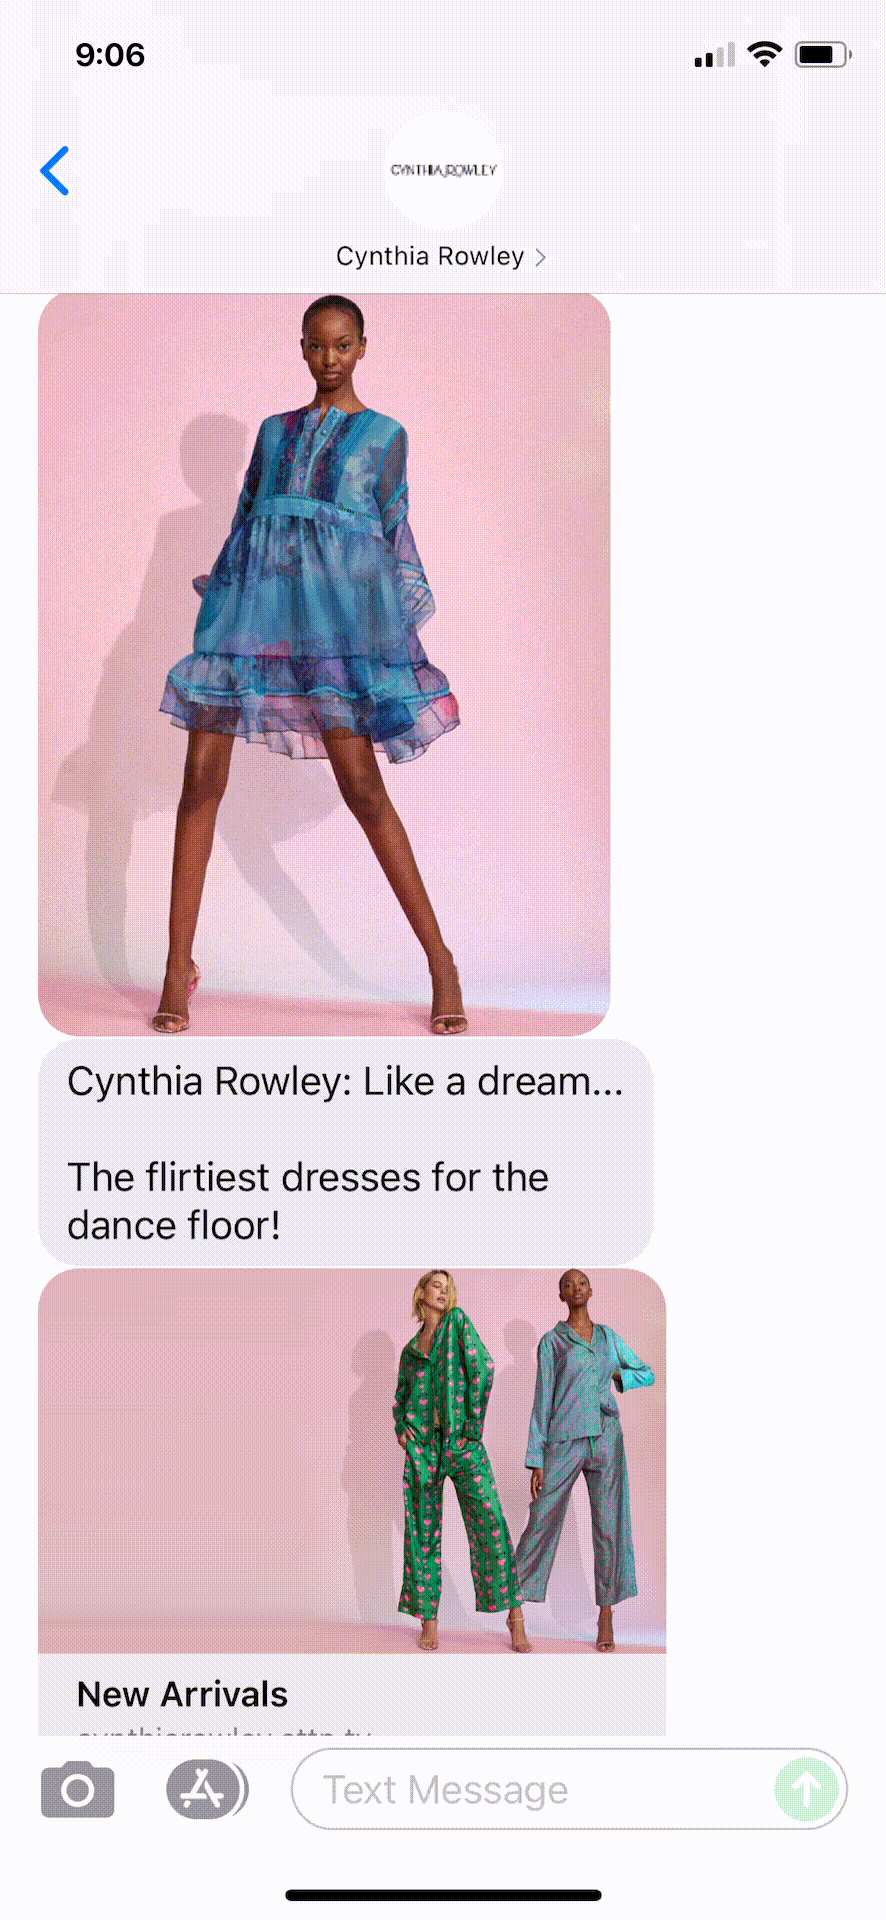 Cynthia-Rowley-Text-Message-Marketing-Example-09.14.2021